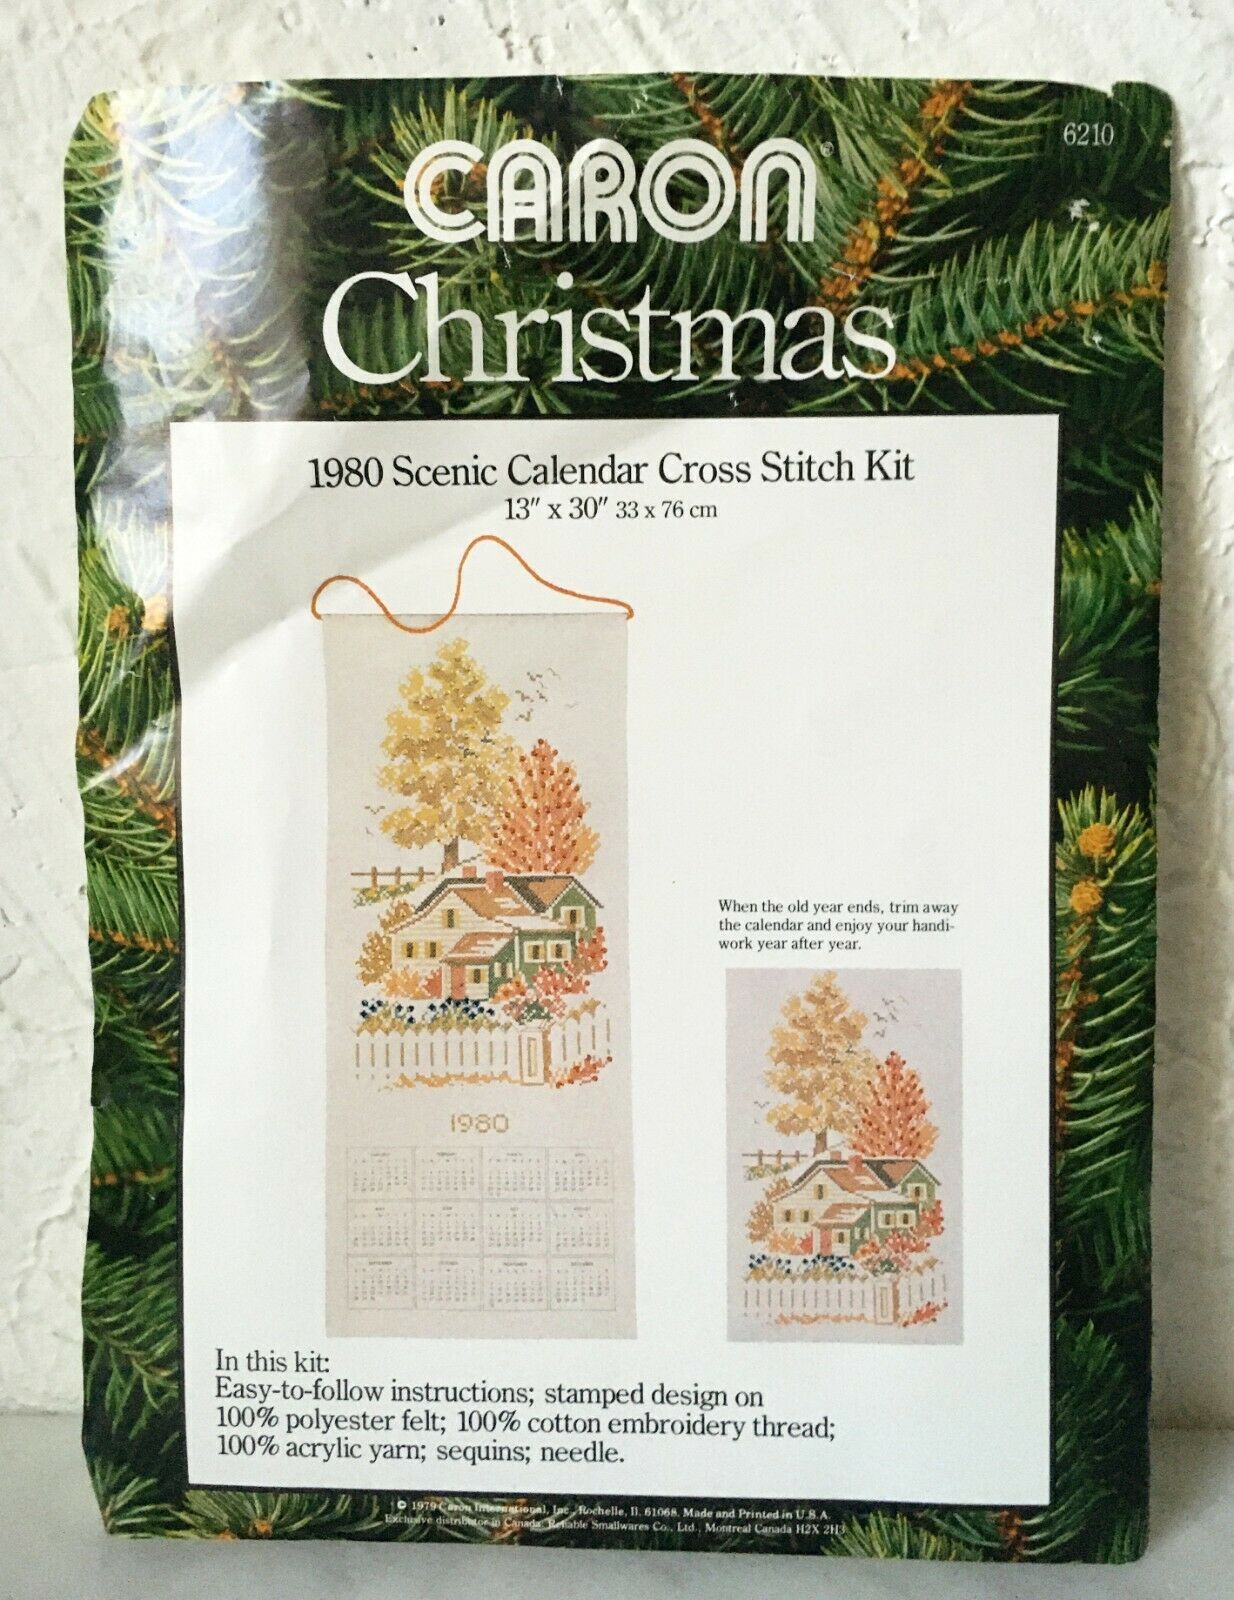 Vintage Caron Christmas 1980 Scenic Calendar Stamped Cross Stitch Kit 13" x 30" - $14.20